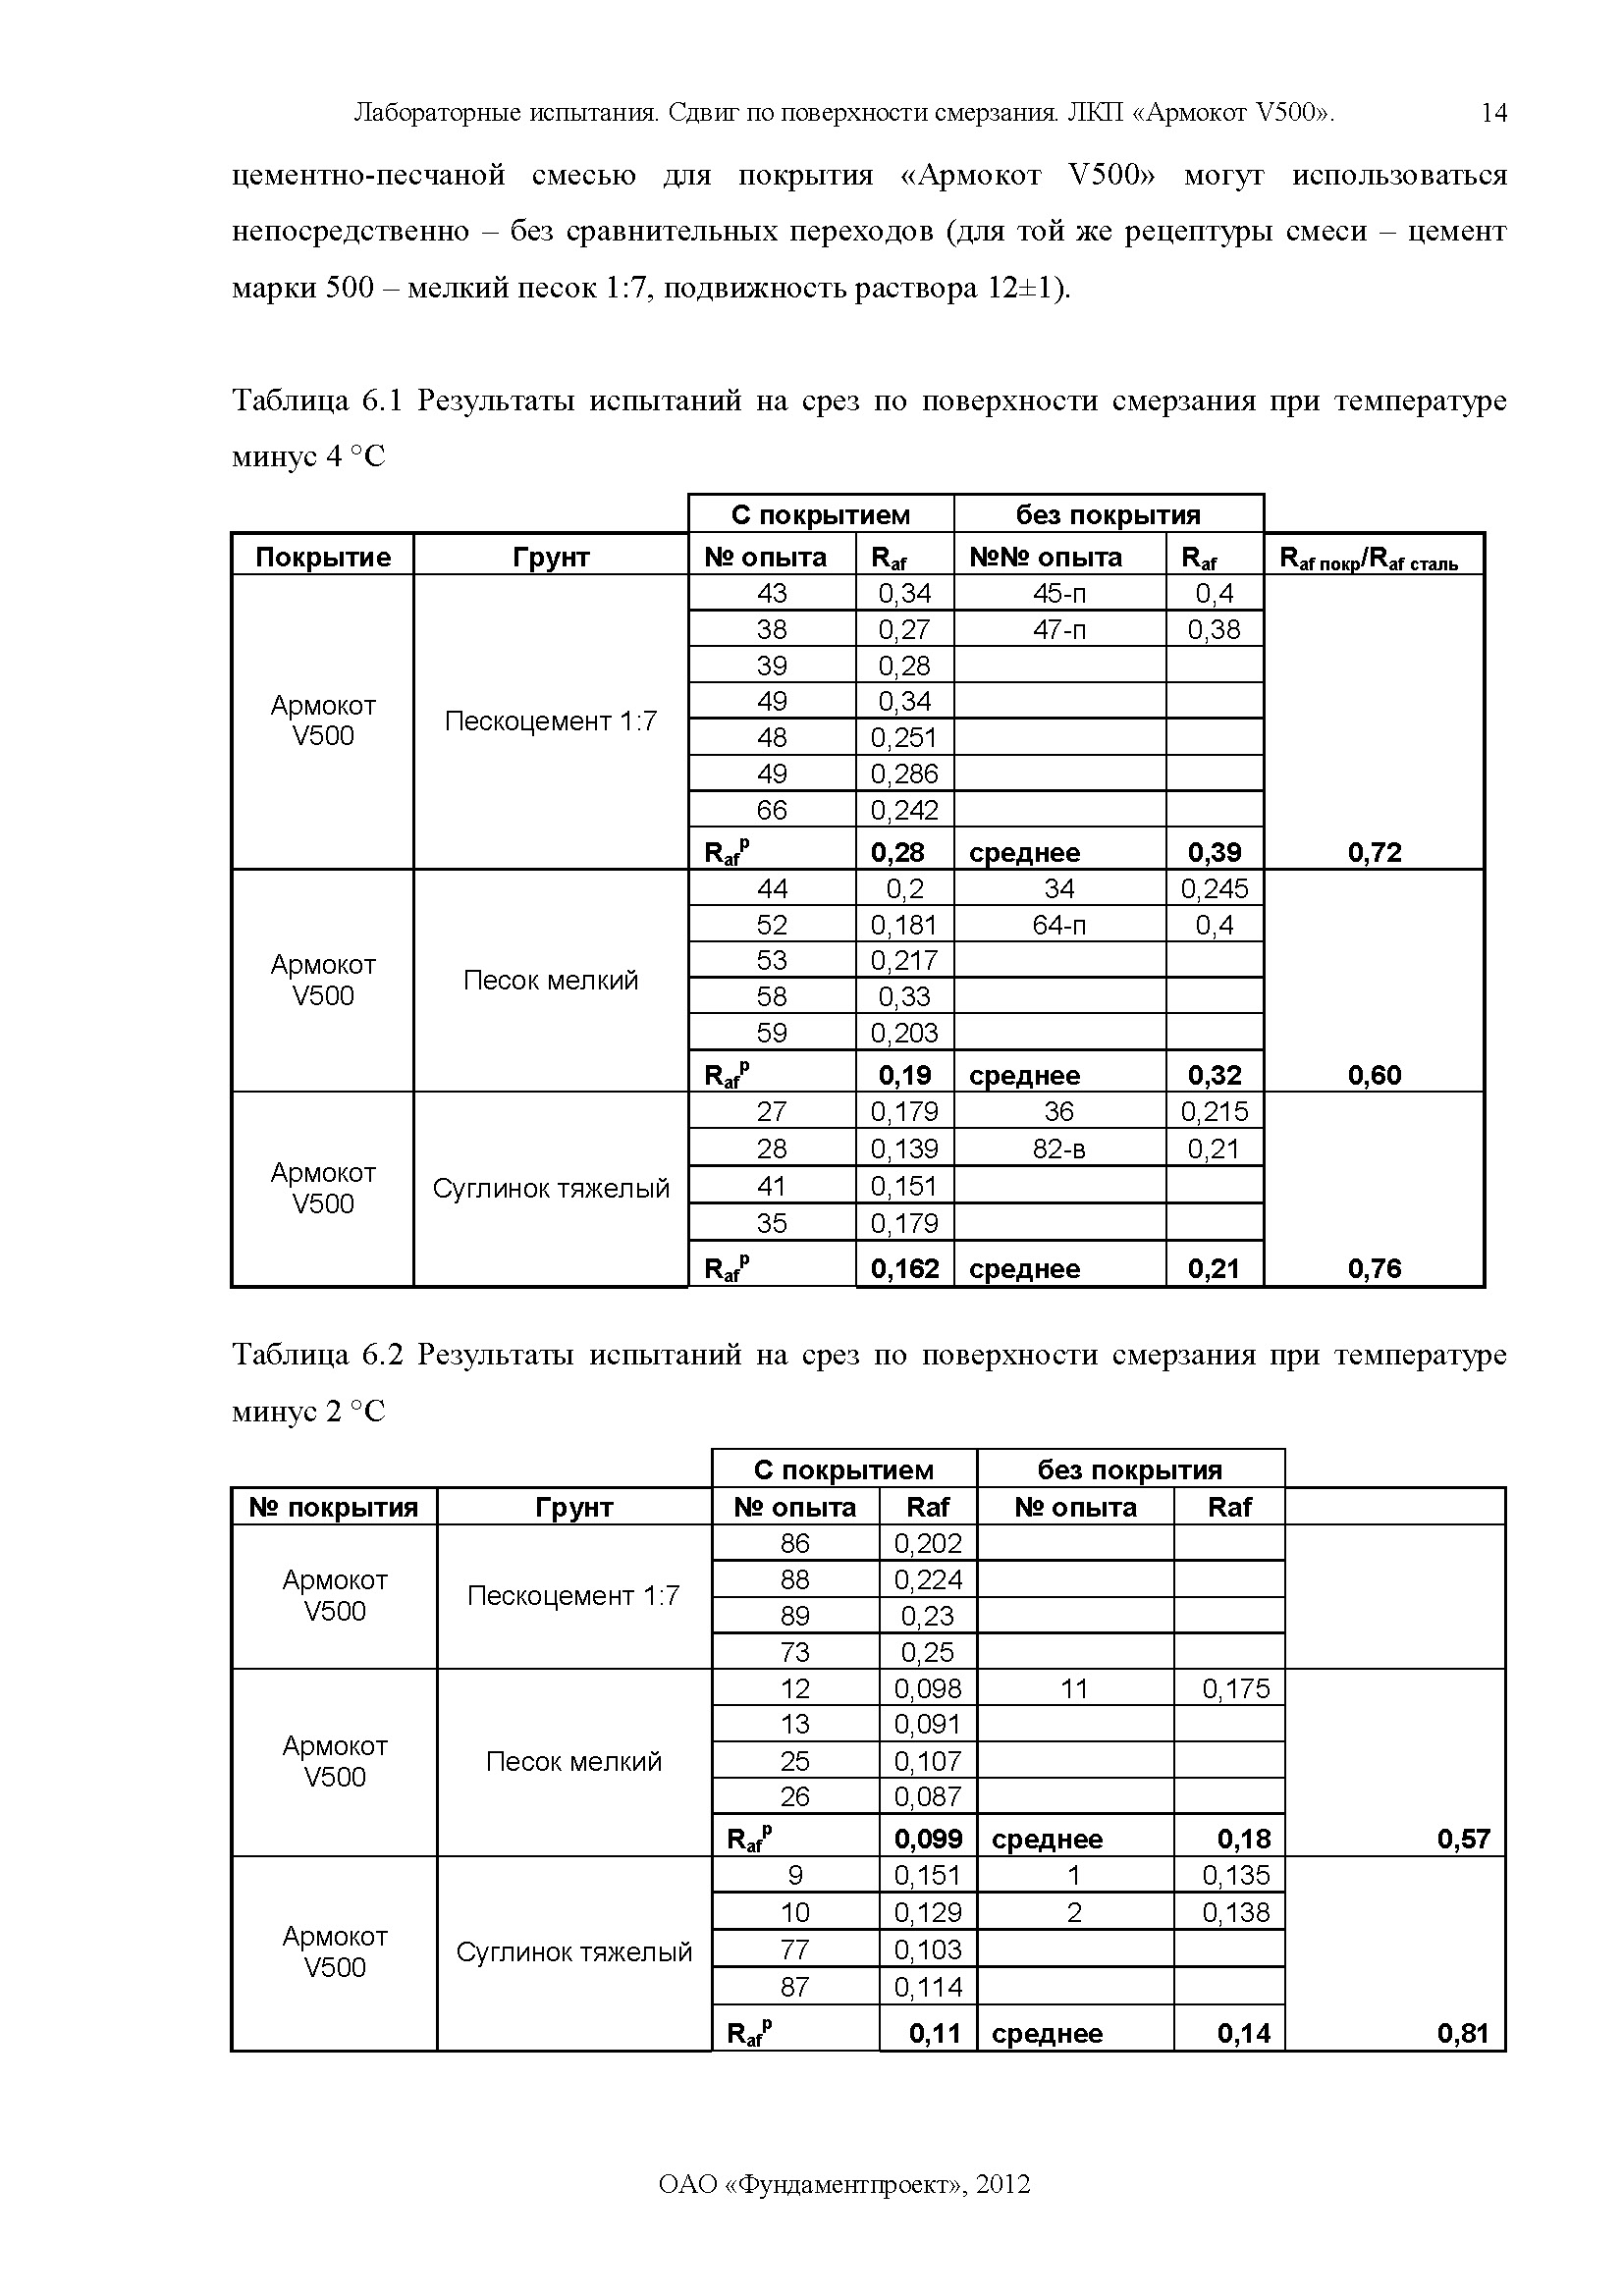 Отчет по сваям Армокот V500 Фундаментпроект_Страница_14